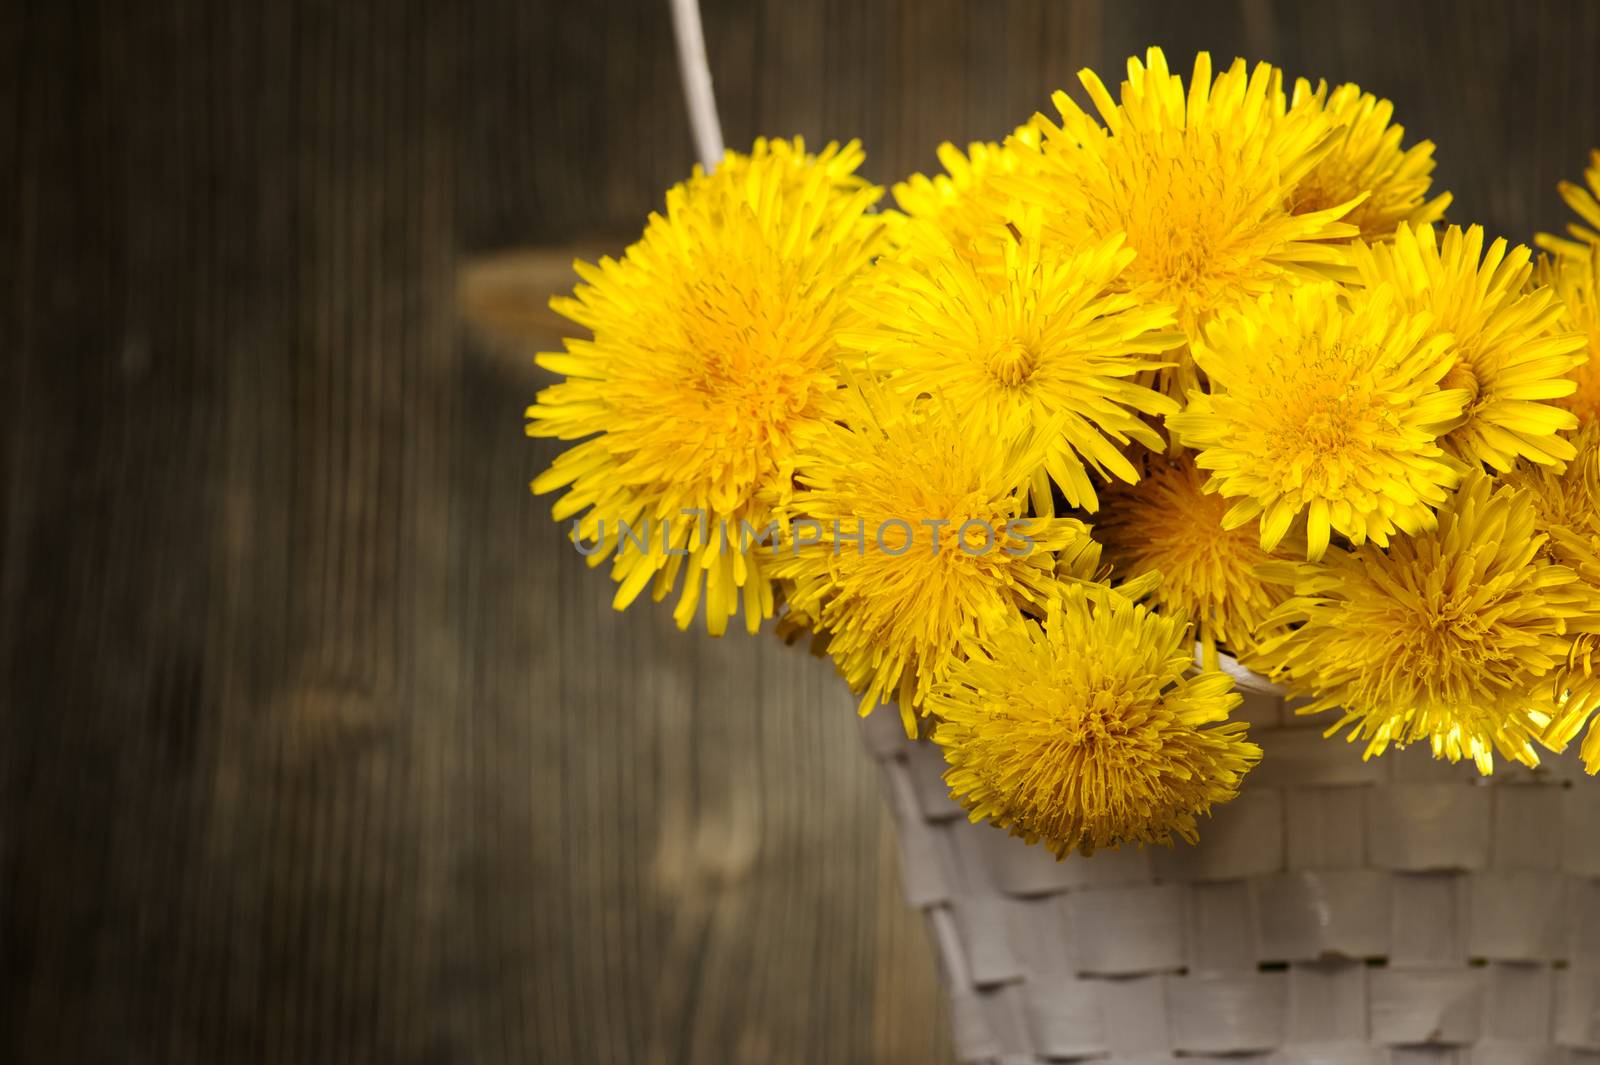 Dandelions in a basket on dark wooden background 